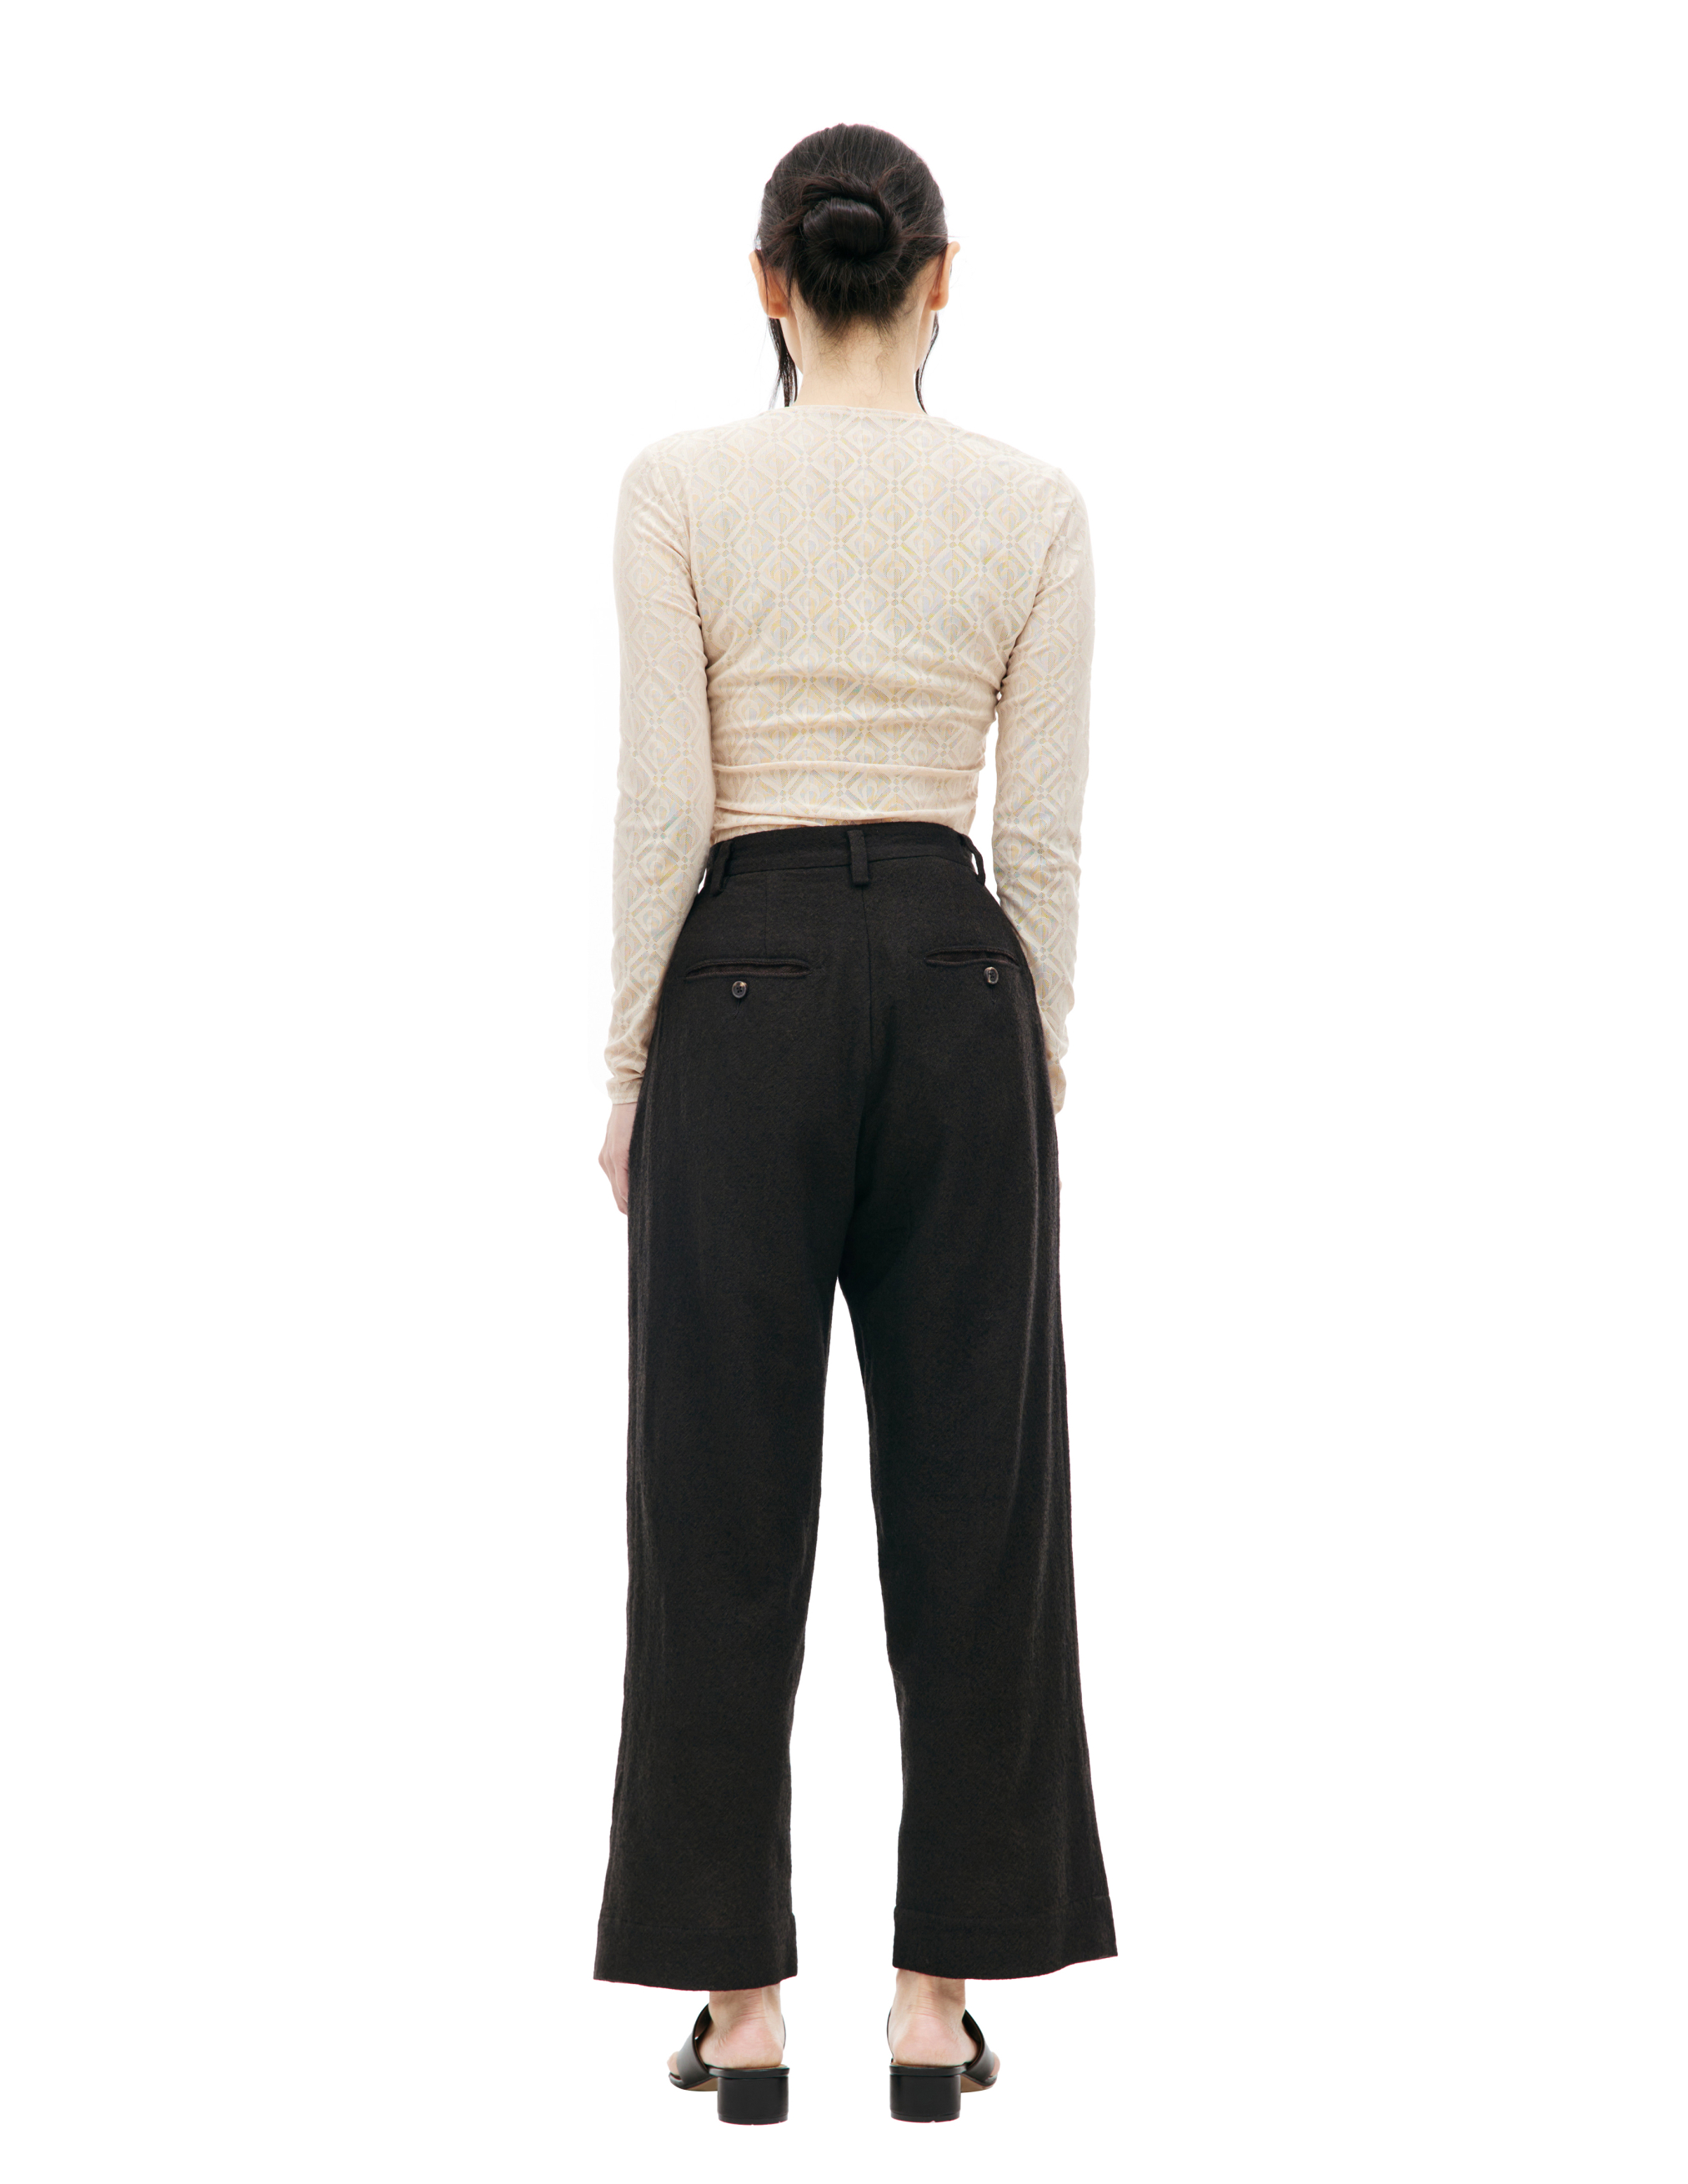 Шерстяные брюки с защипами Ziggy Chen 0W2330501, размер 36 - фото 3